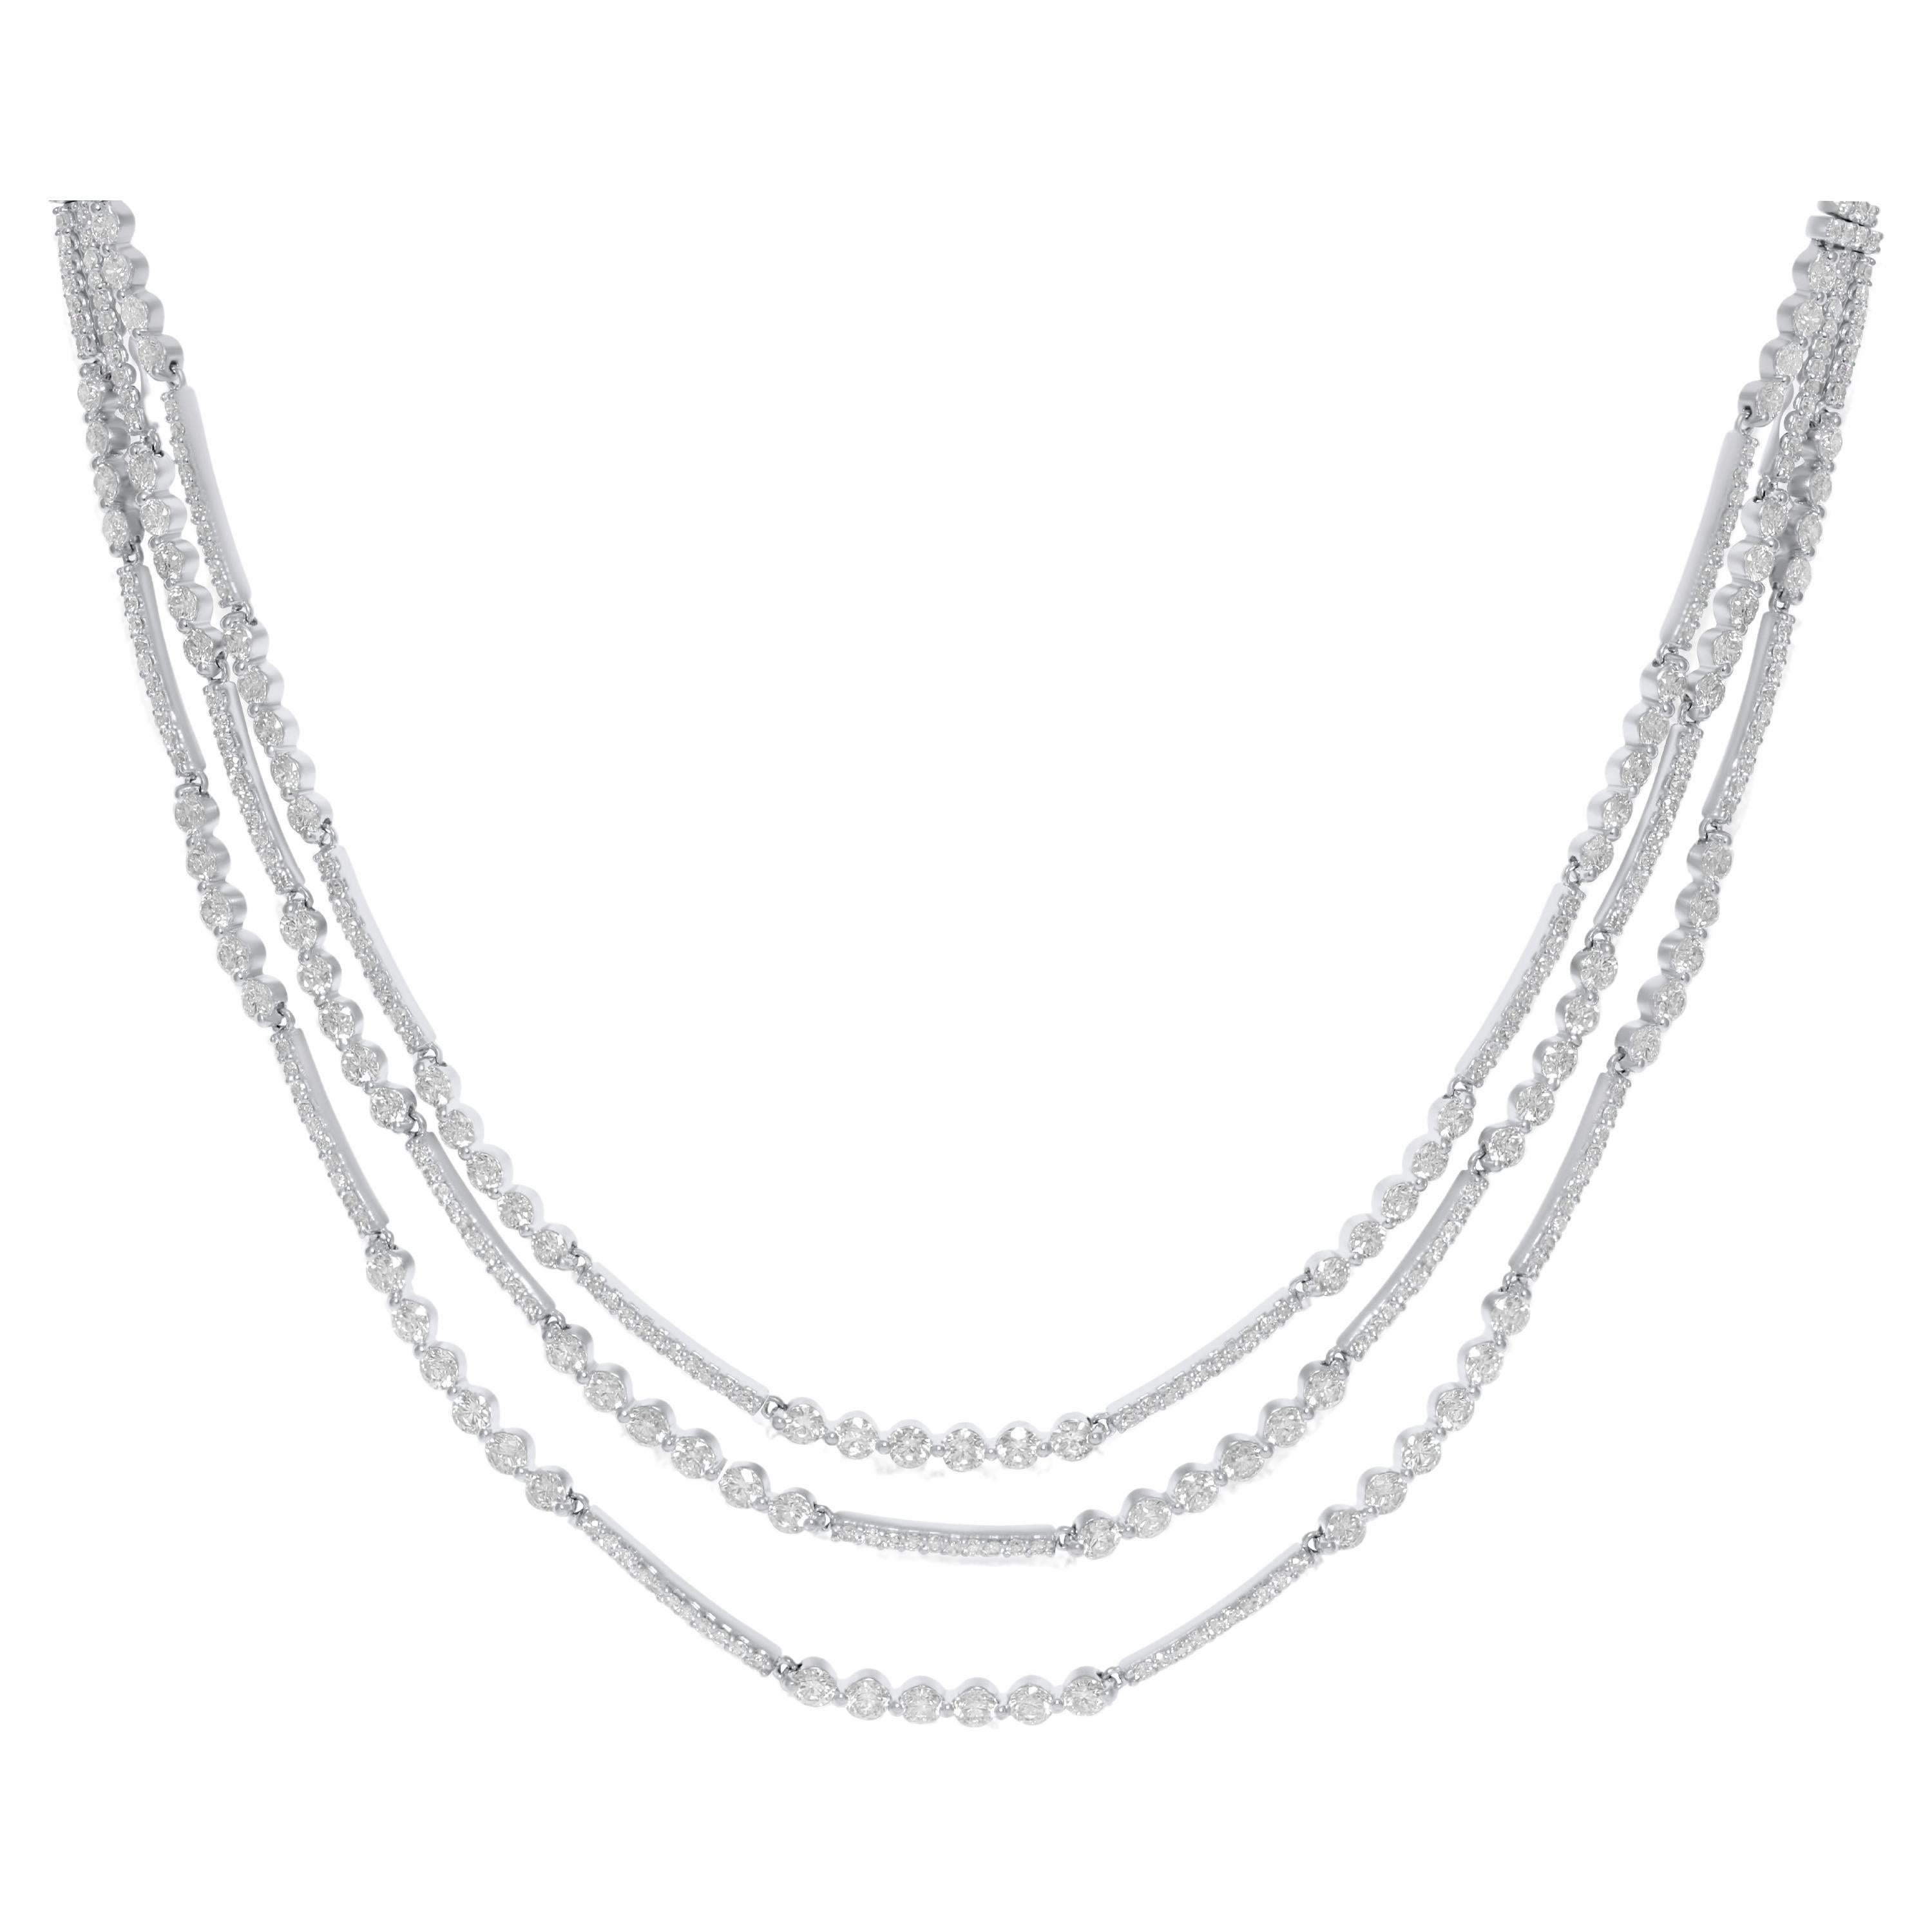 Diana M. 9.75 Carat Diamond Layered Necklace